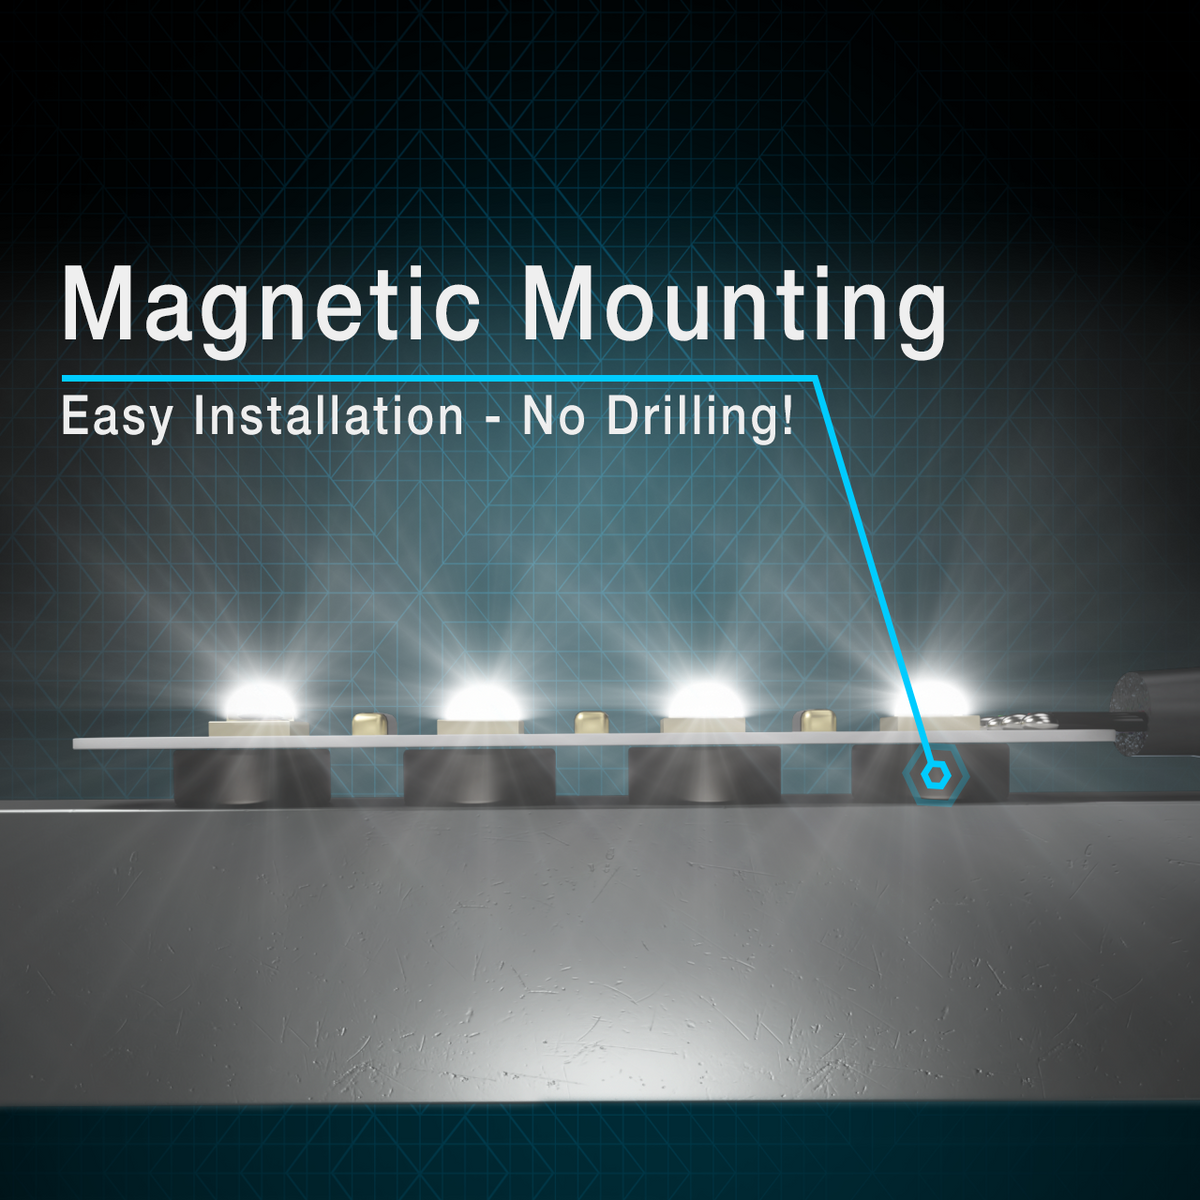 MAX White Magnetic Industrial LED Light